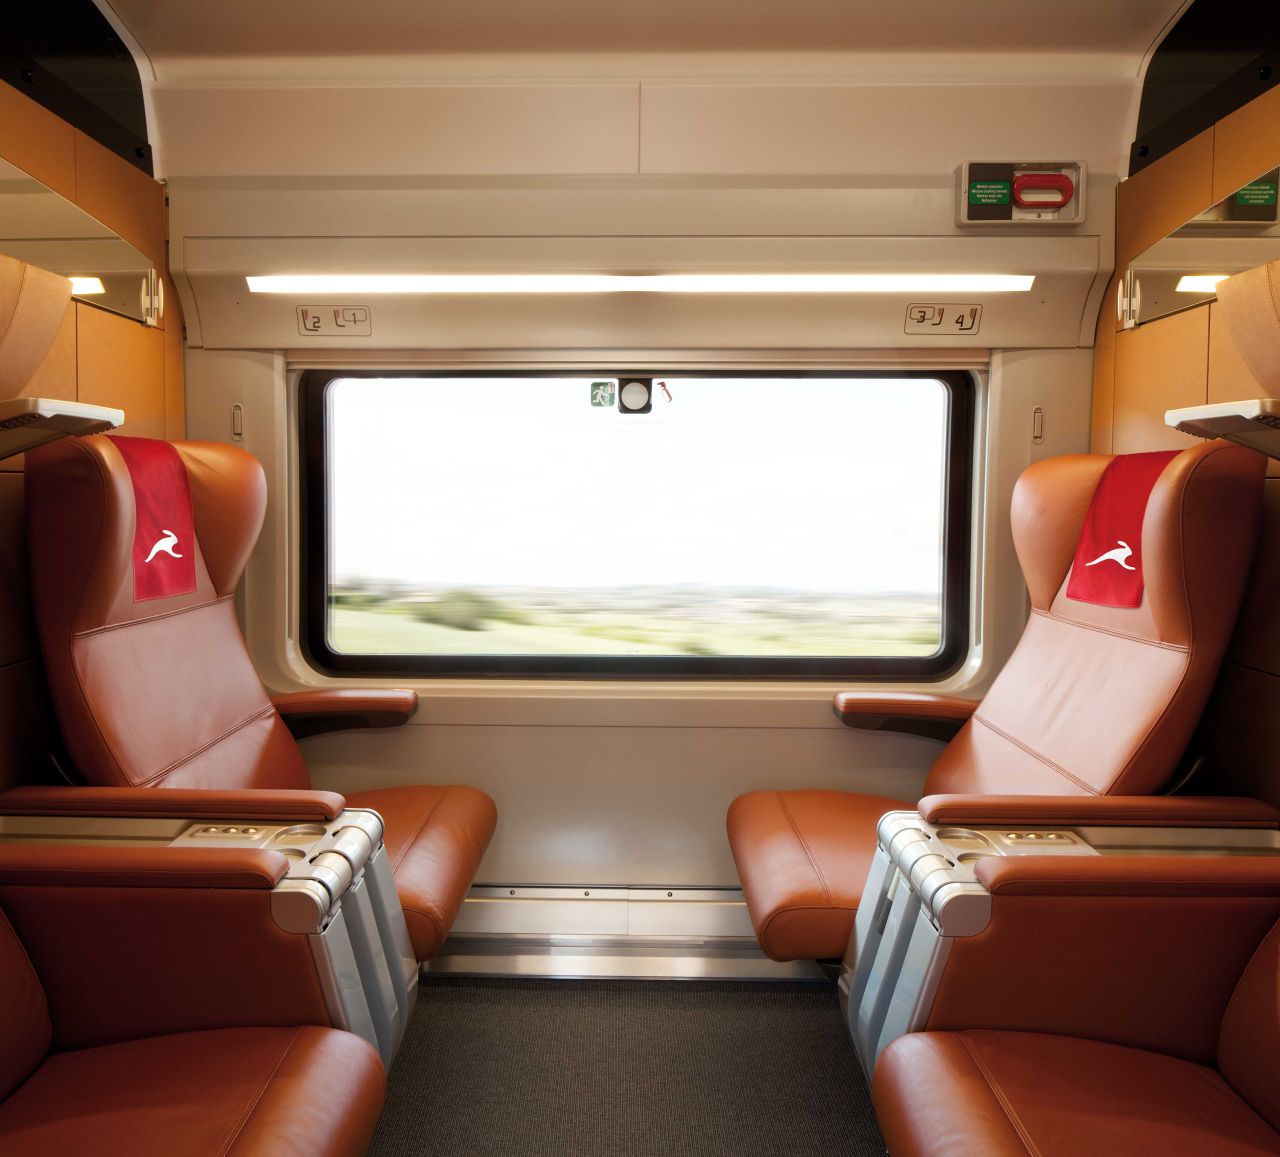 Italo is bringing high-speed rail to Genoa.